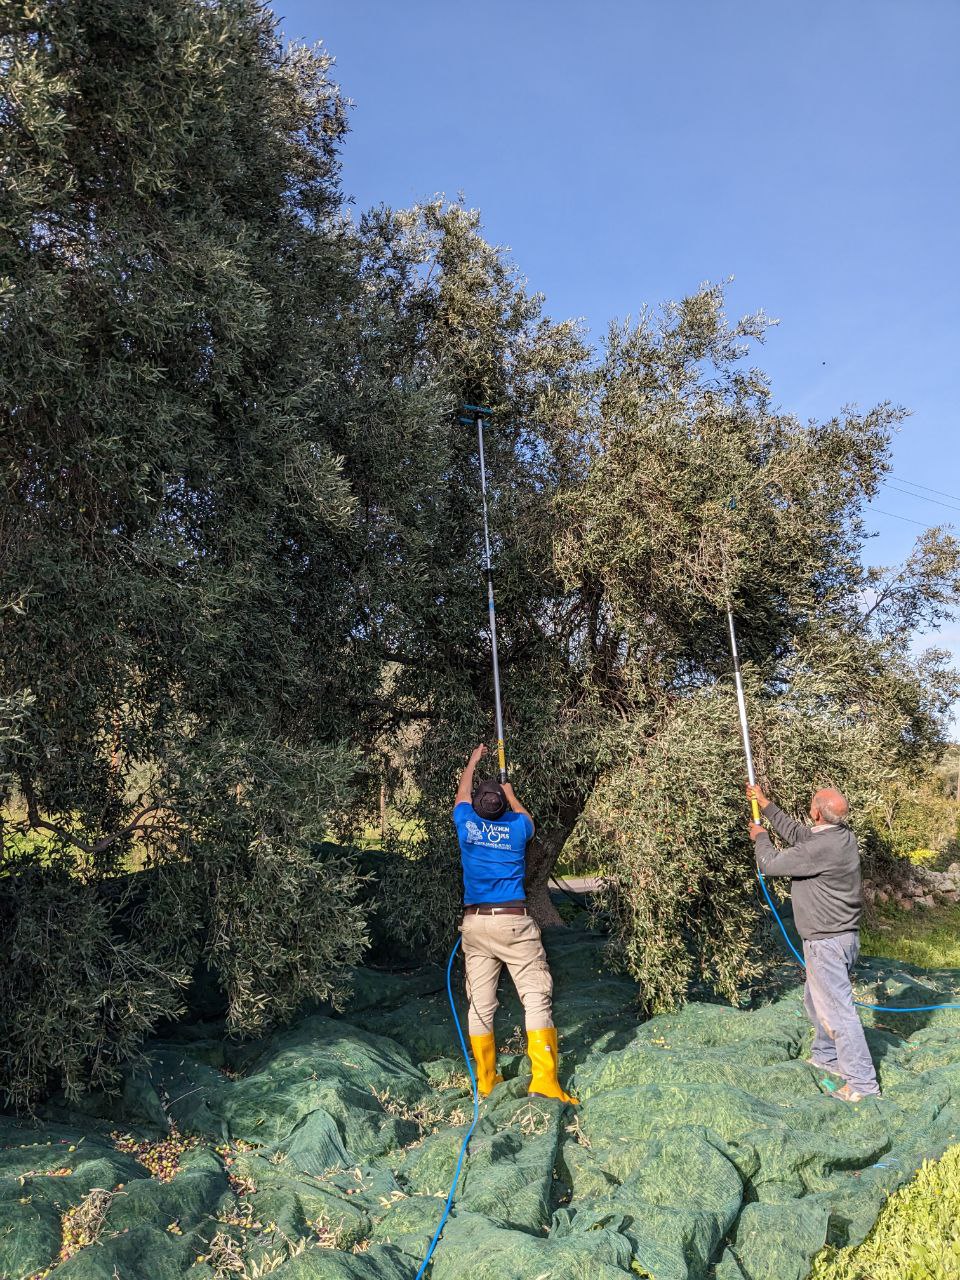 Men harvesting olives with motored rakes